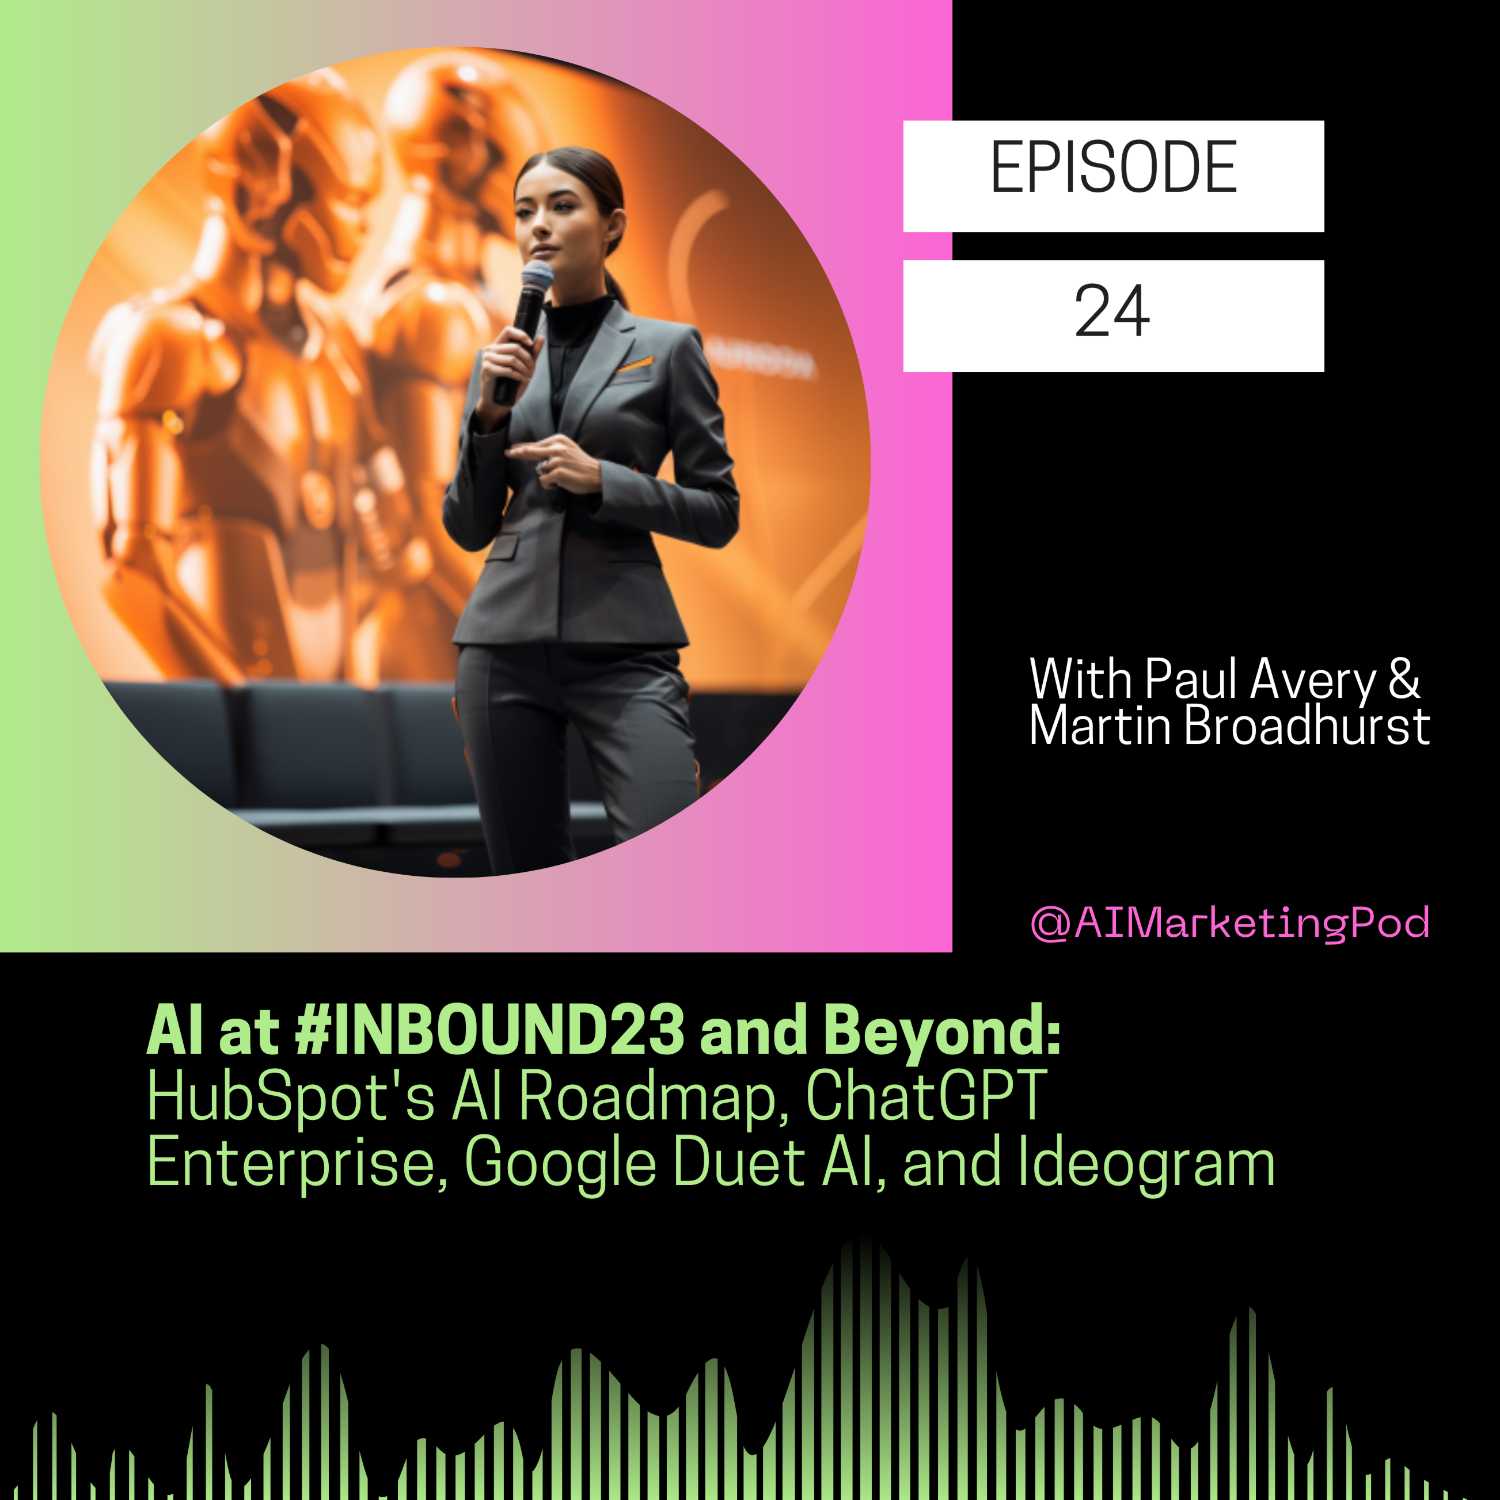 AI at #INBOUND23 and Beyond: HubSpot's AI Roadmap, ChatGPT Enterprise, Google Duet AI, and Ideogram